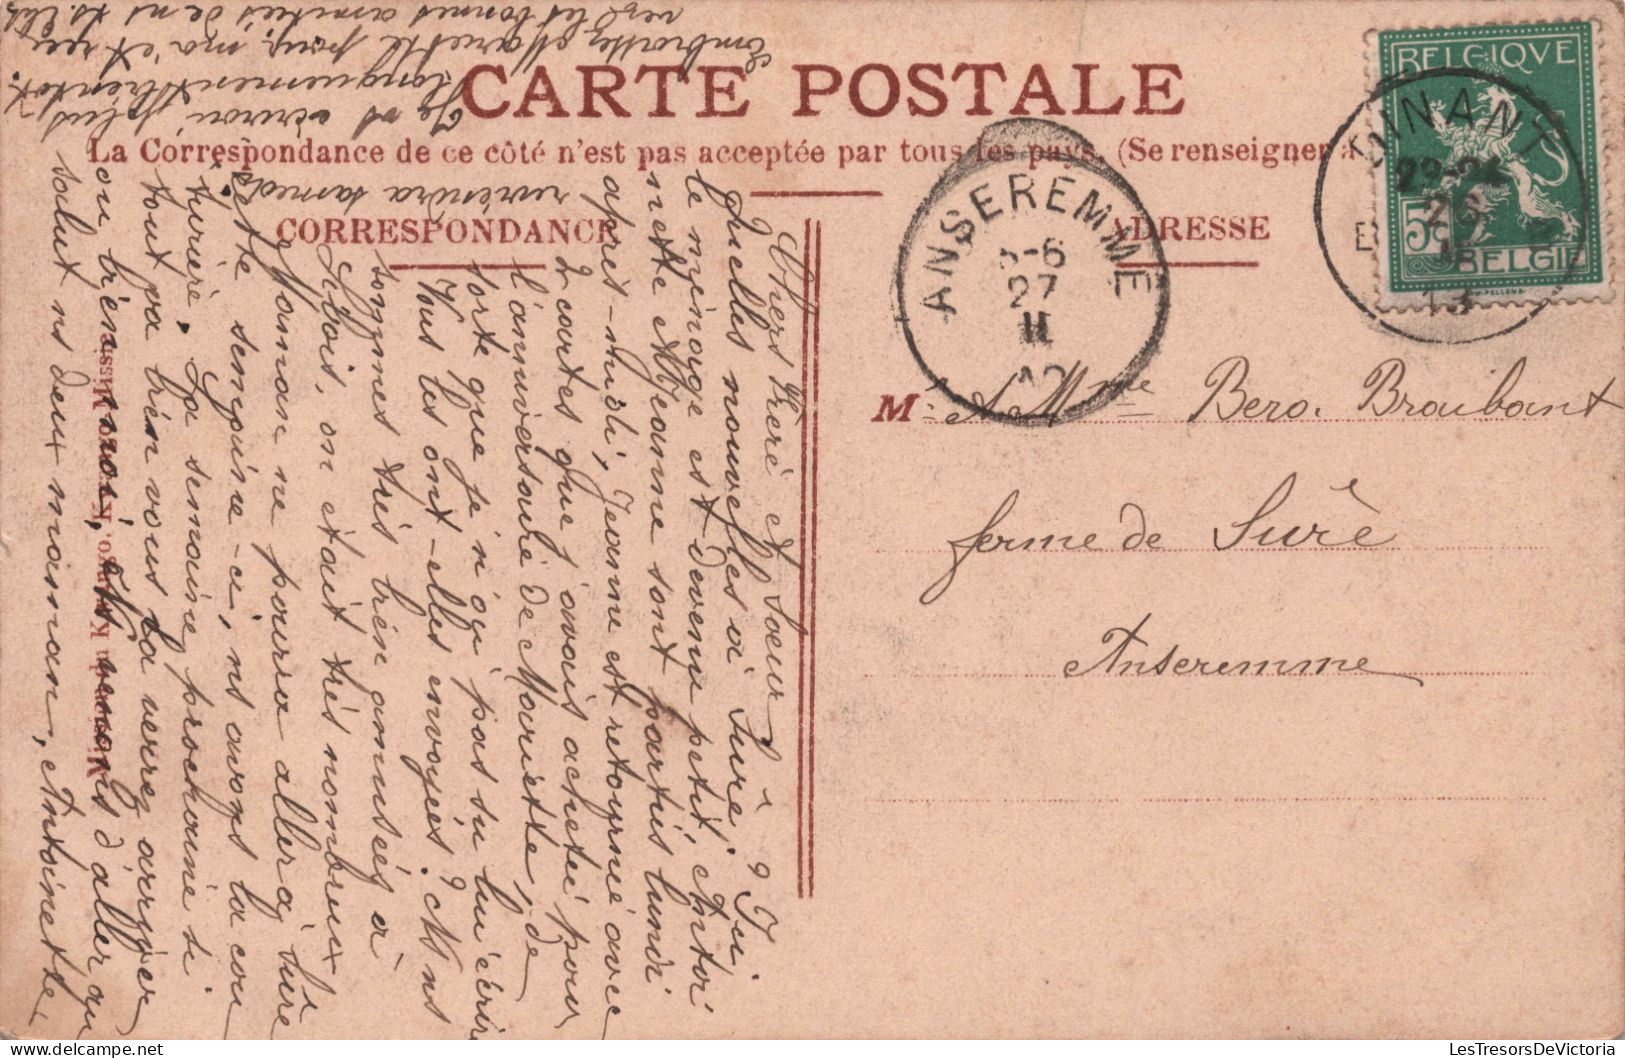 Kisantu - Jeunes Mariés - Jonge Getrouwden   - Carte Postale Ancienne - Sonstige & Ohne Zuordnung